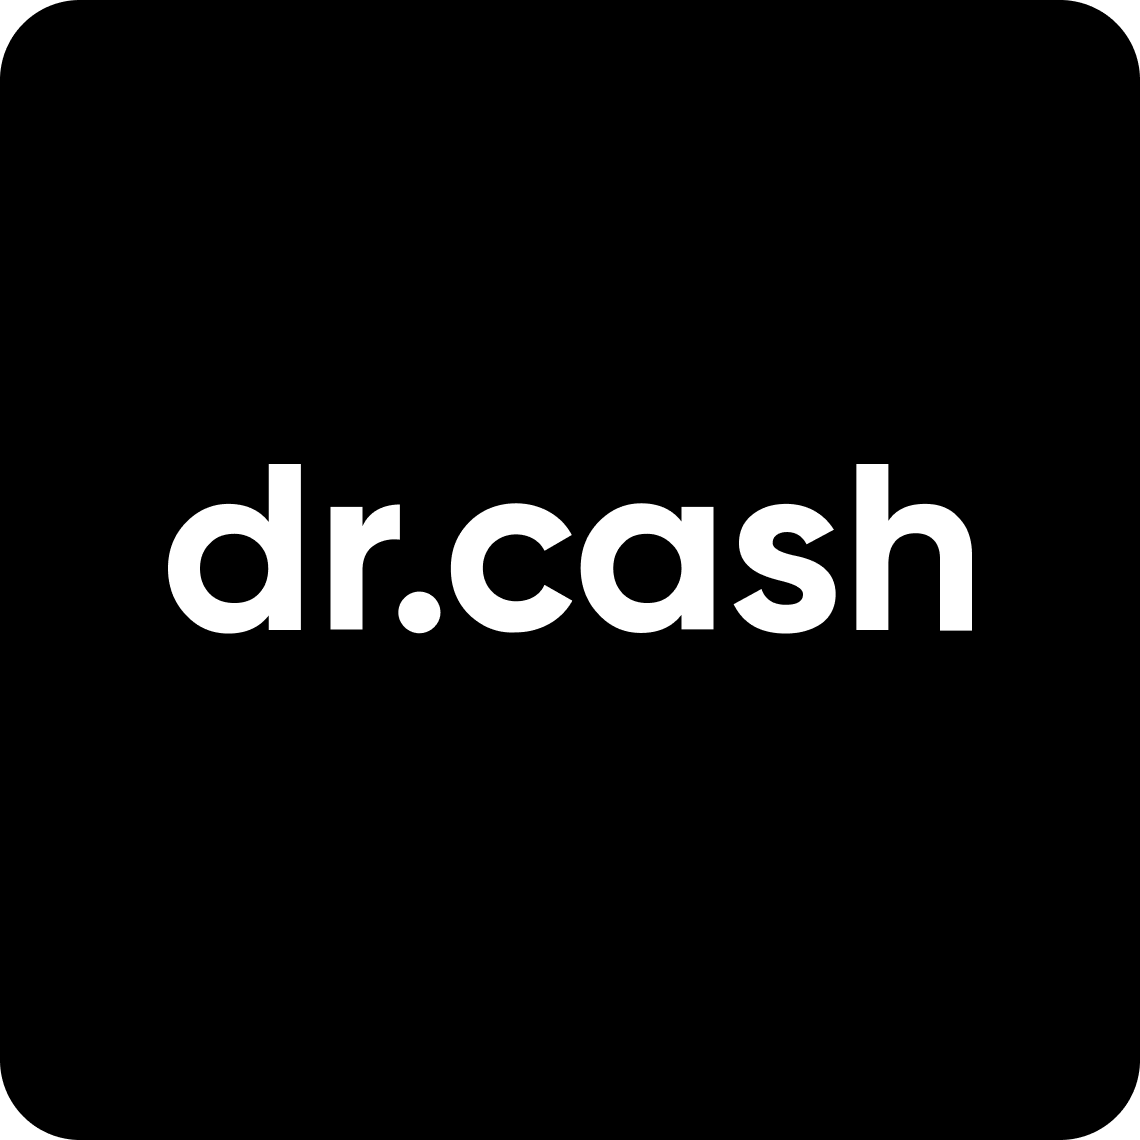 dr.cash - Company logo